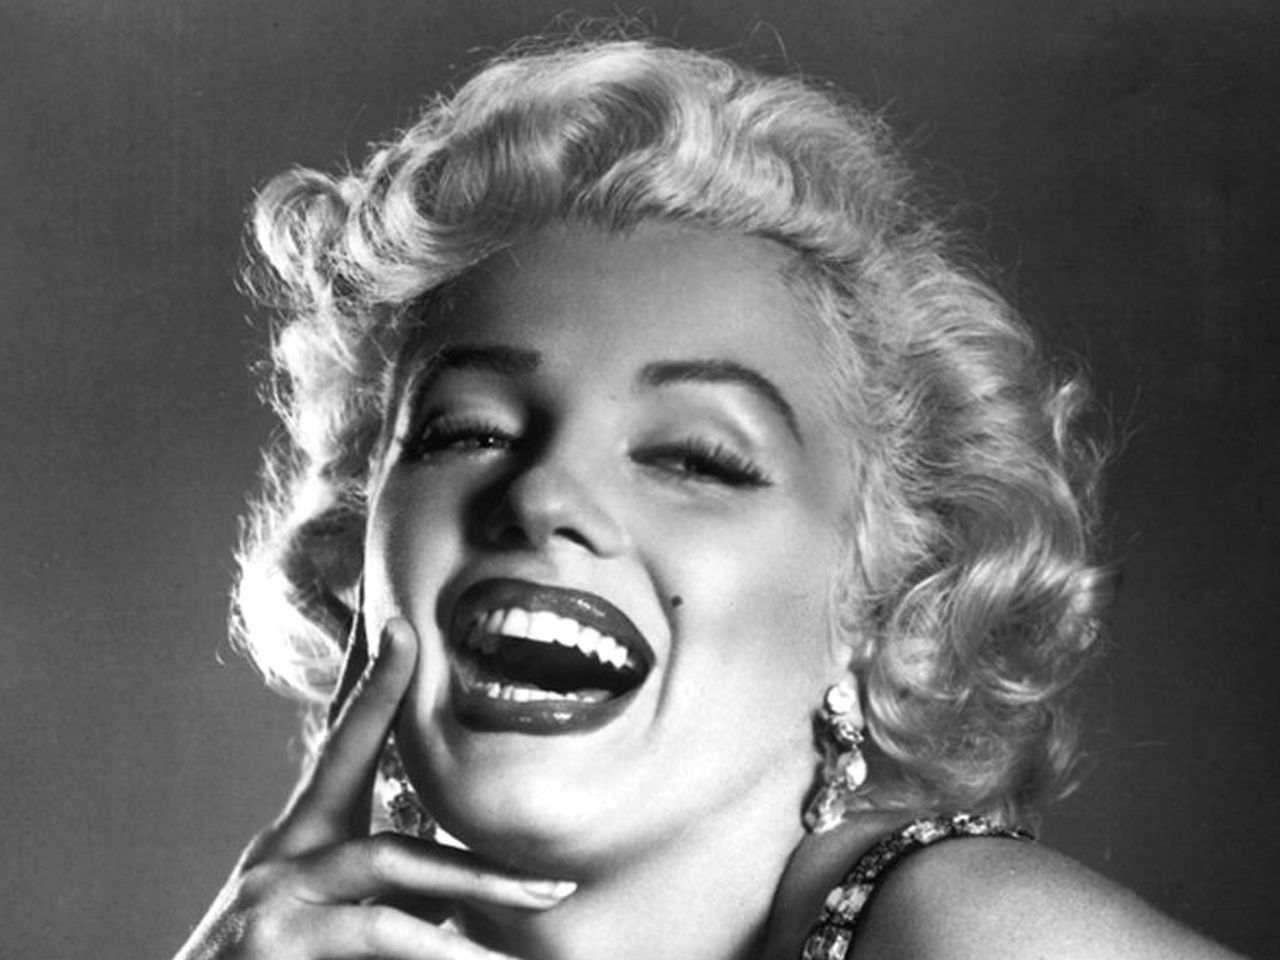 LAPD detective claims 'JFK's brother Bobby poisoned Marilyn Monroe' 